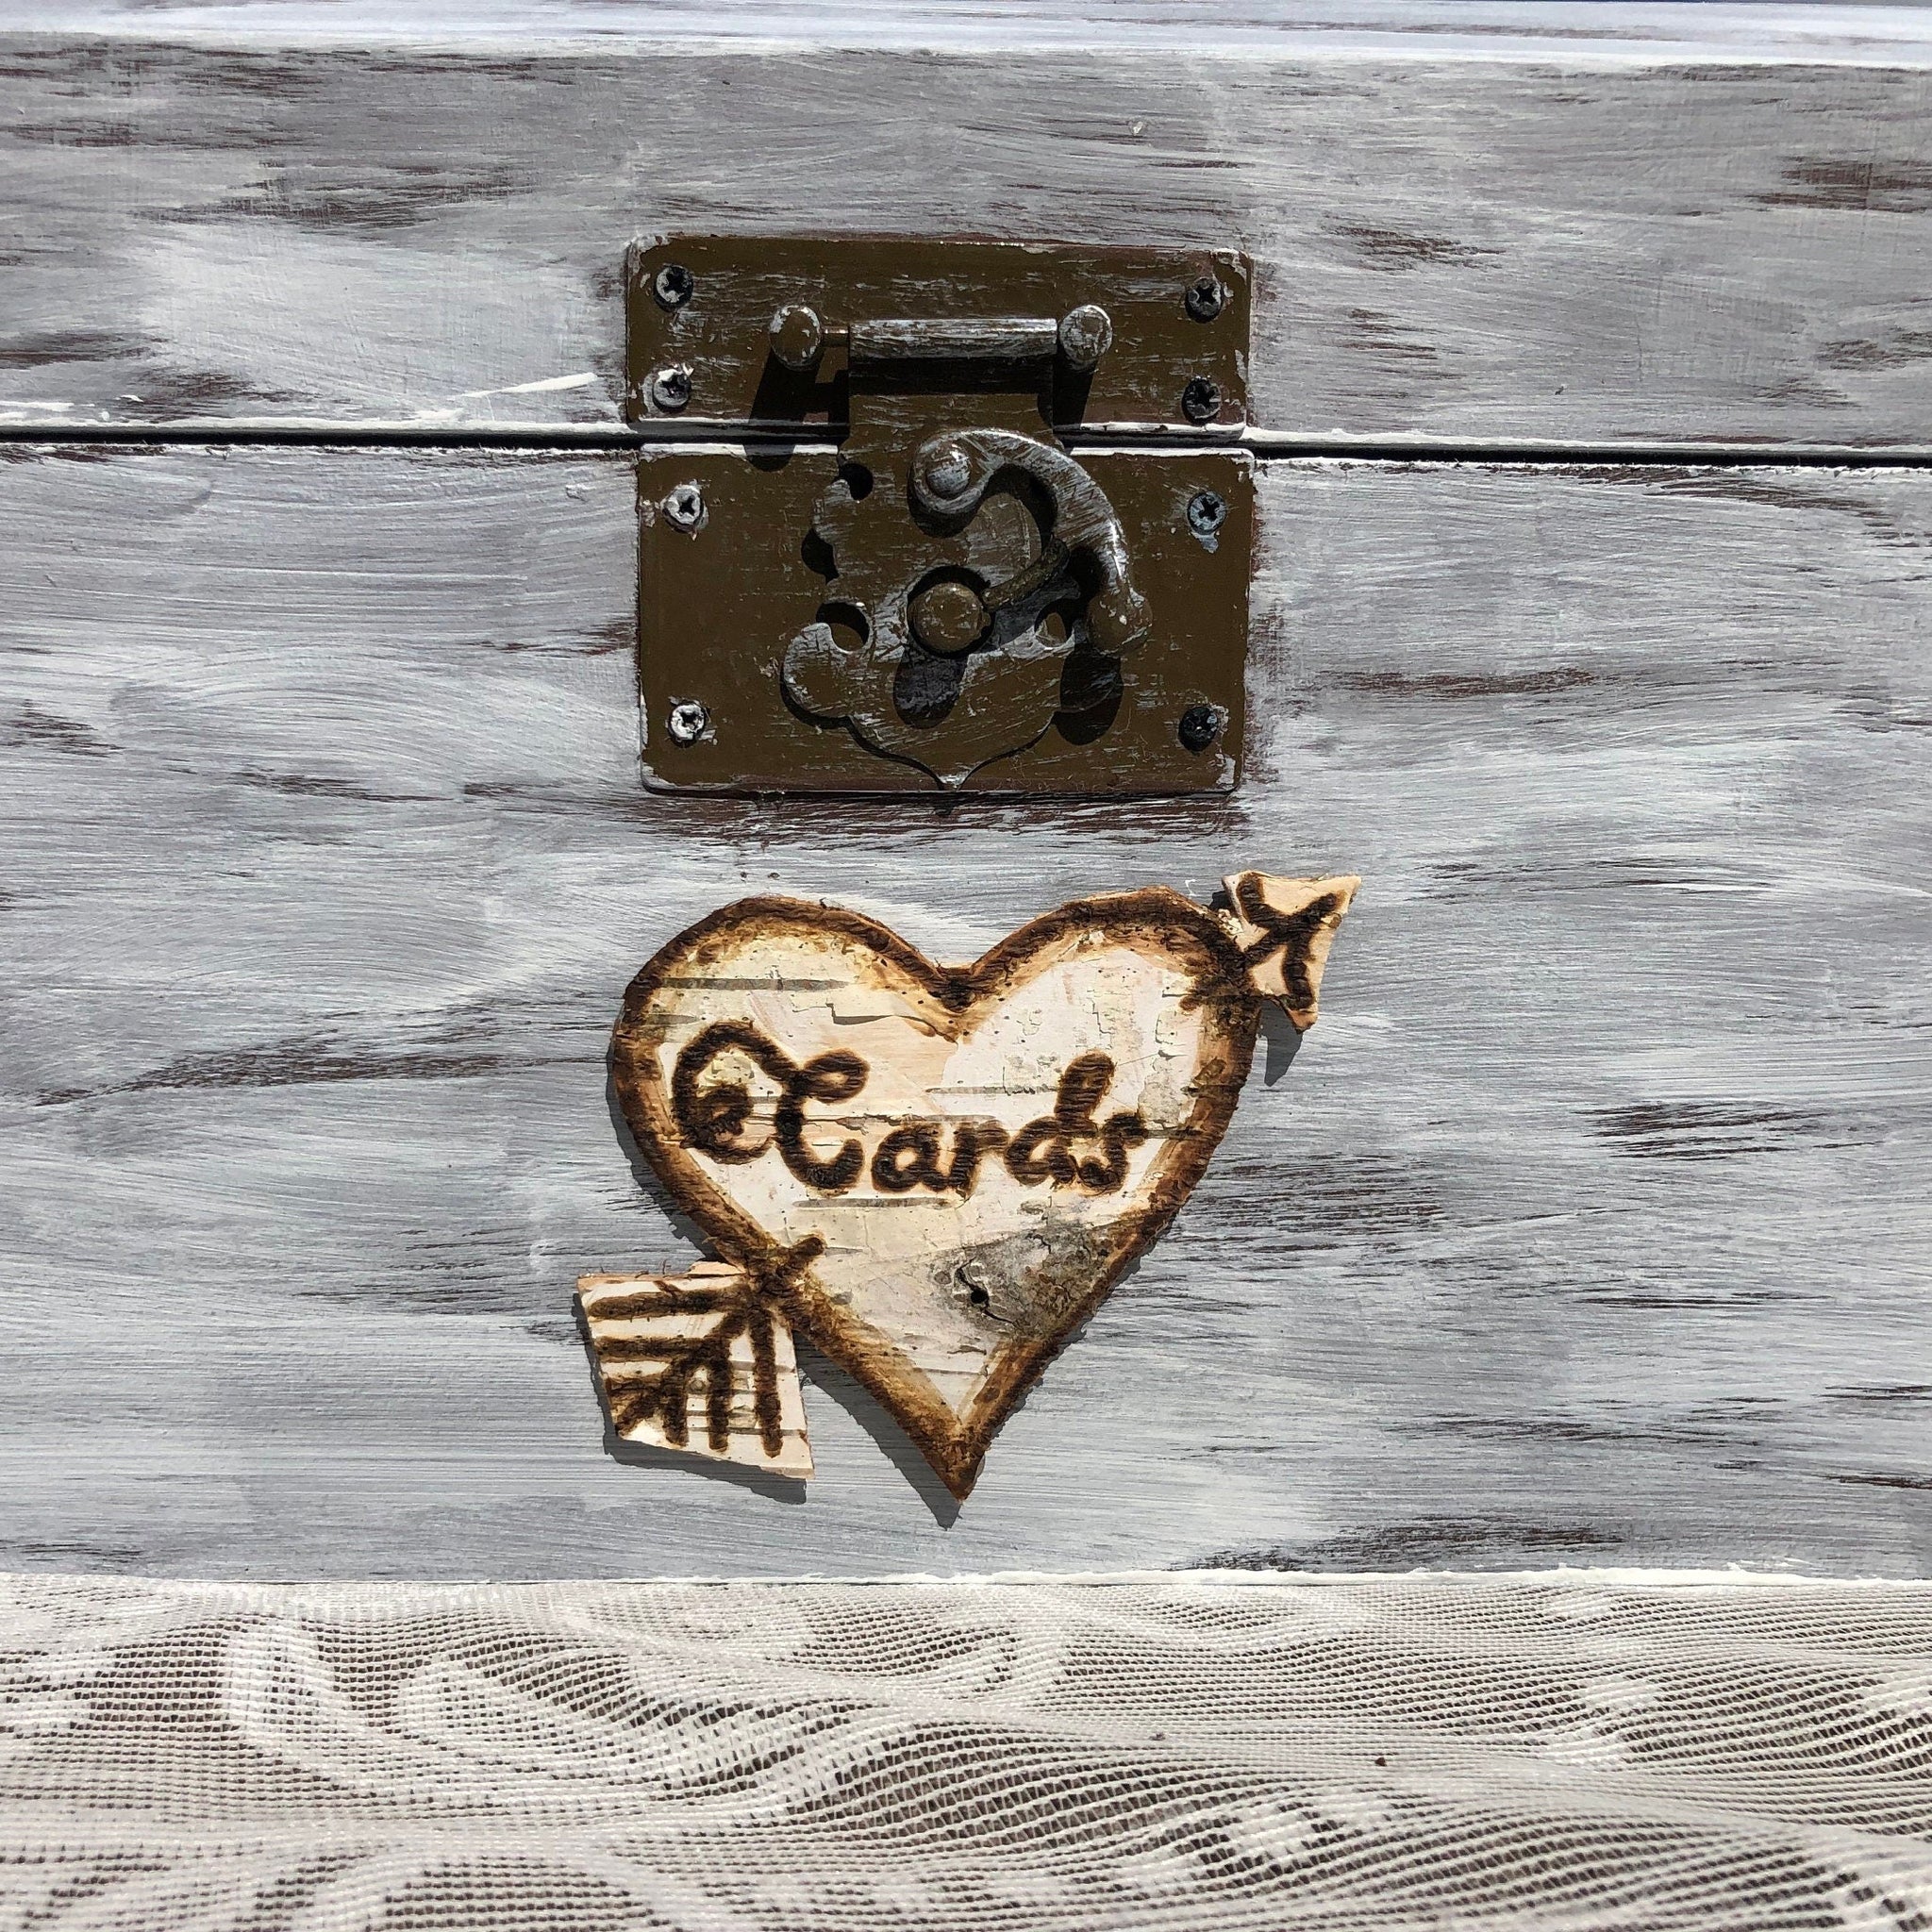 Card Box Wedding Card Holder Wooden Wedding Card Box Rustic Wedding card box